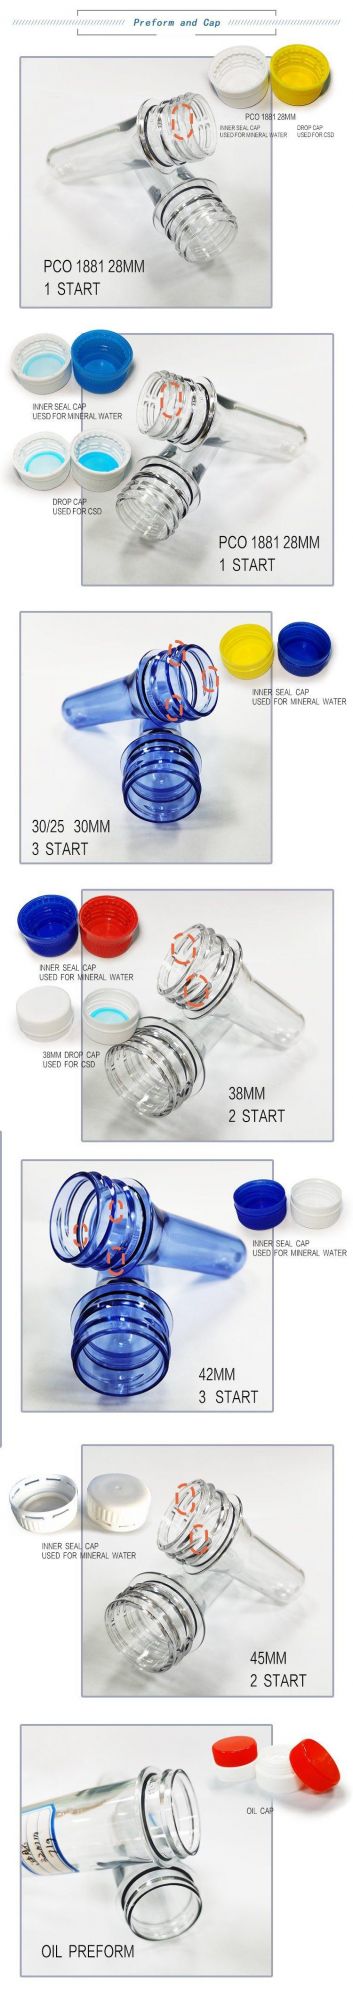 48mm Neck Pet Preform /Water Bottle Preform